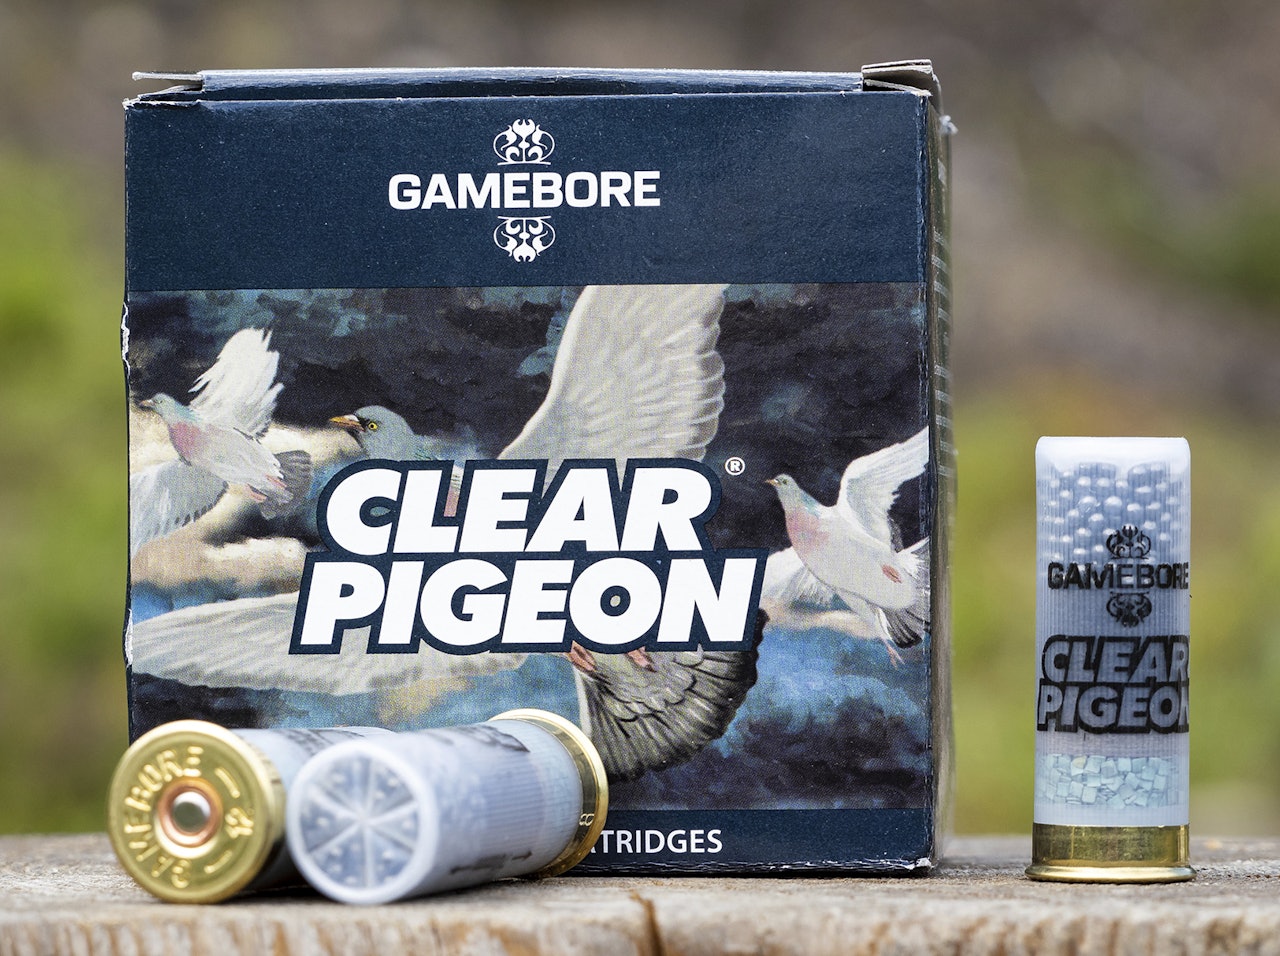 Gamebore Clear Pigeon haglepatroner test